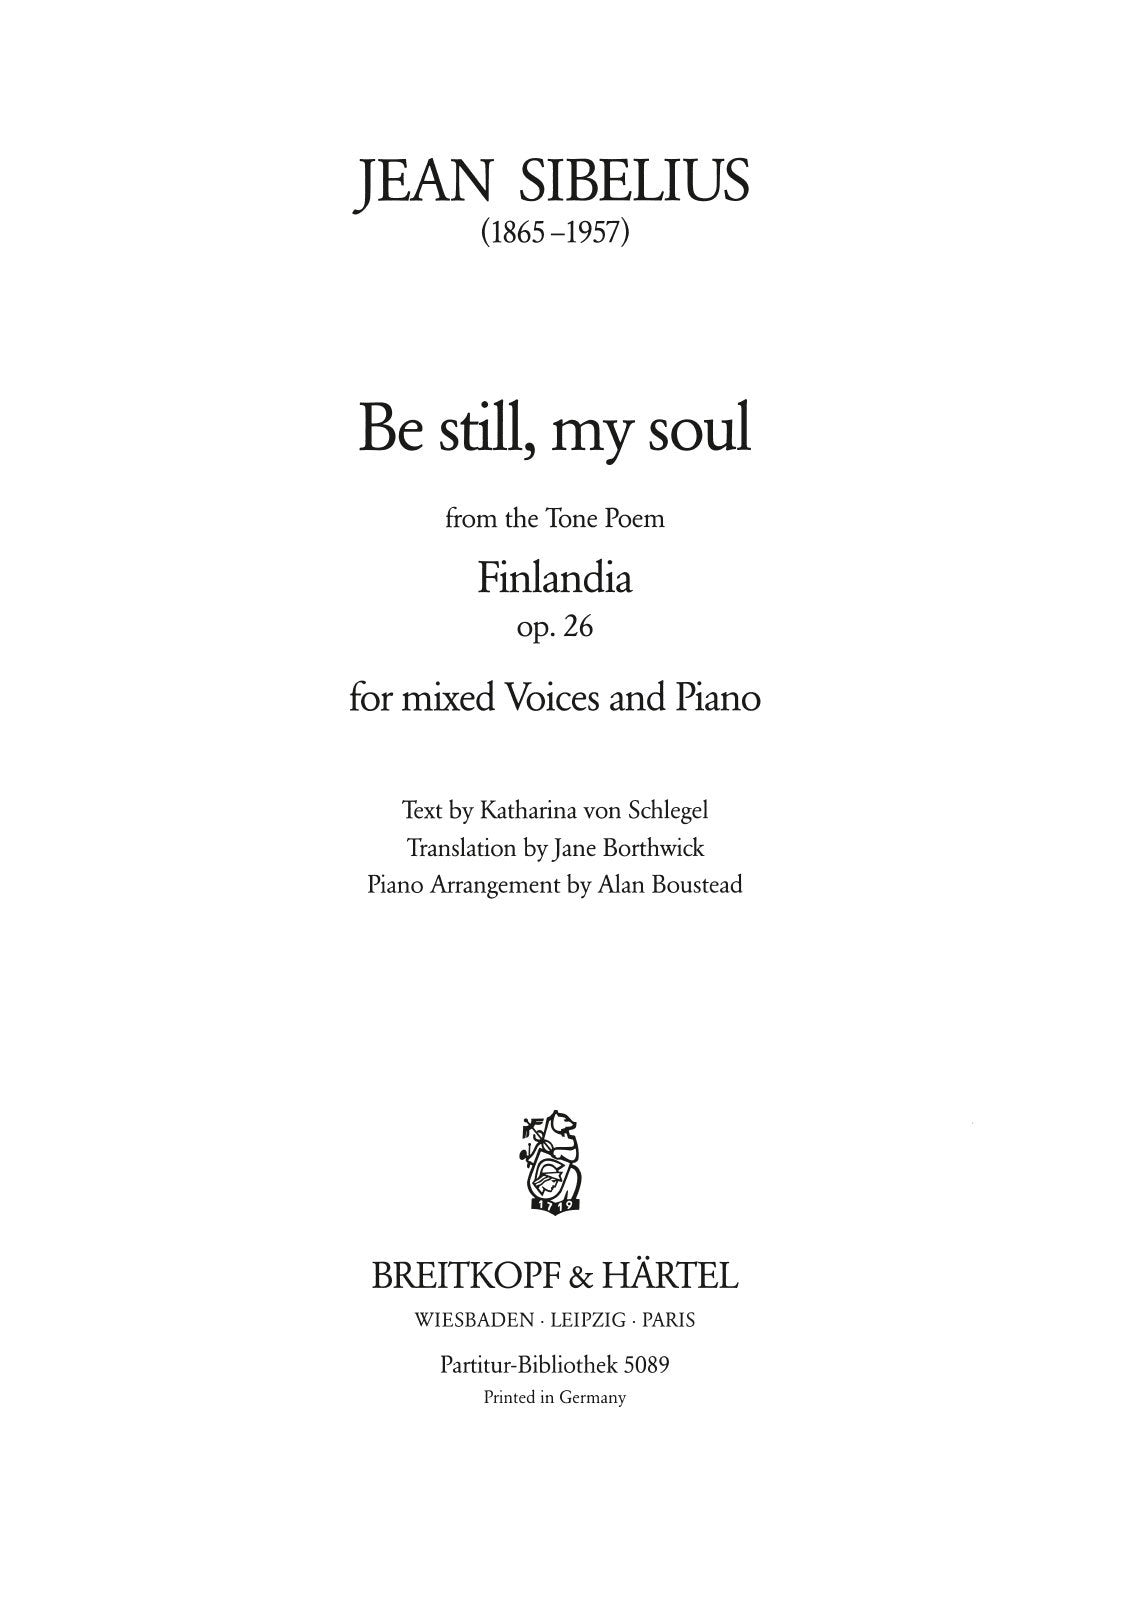 Sibelius: Be still, my soul (Finlandia Hymn) arr. for mixed choir & piano